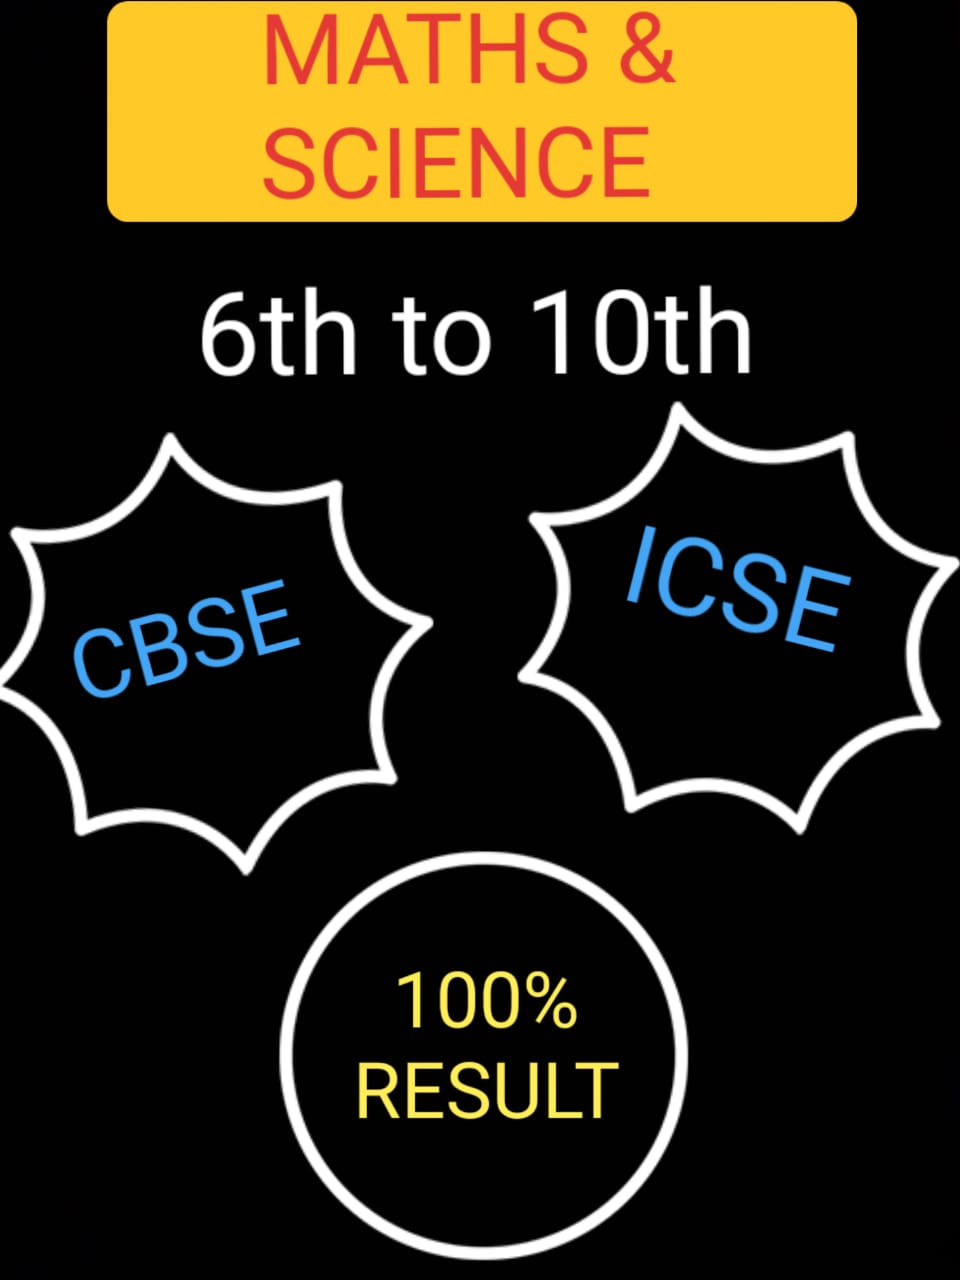 Kudrat Academy, 10th Science Coaching Institute in Chandigarh, Science Coaching Institute in Chandigarh, 9th Science Coaching Institute in Chandigarh, 10th Science Institute in Chandigarh,10th Science Institute